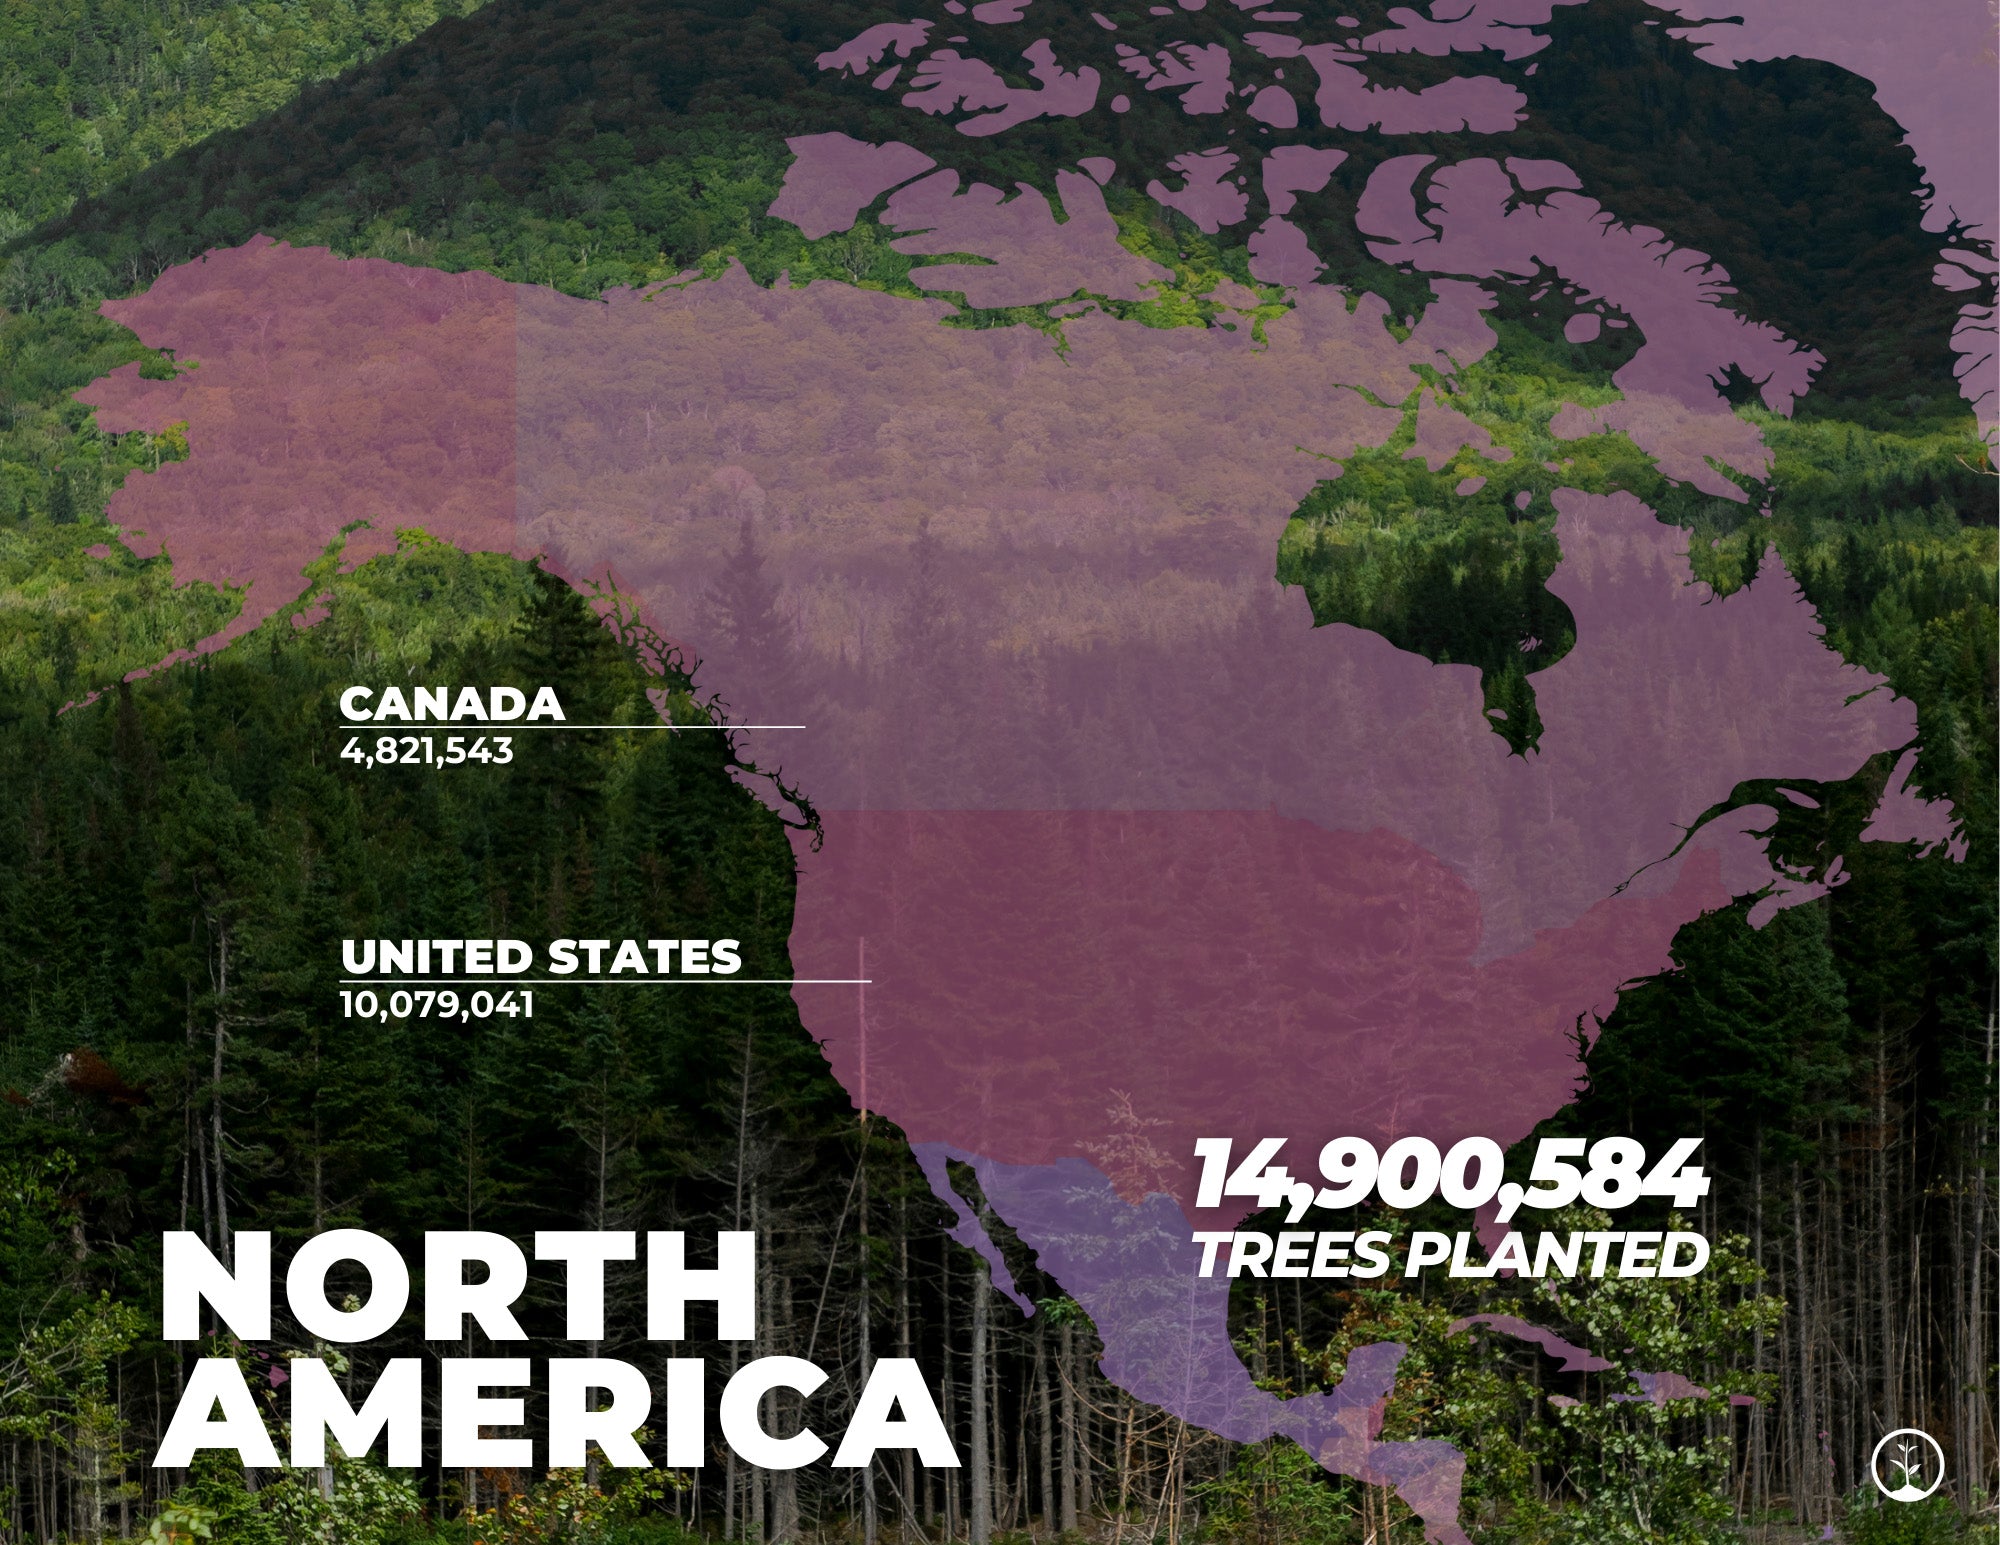 tree planting stats north america